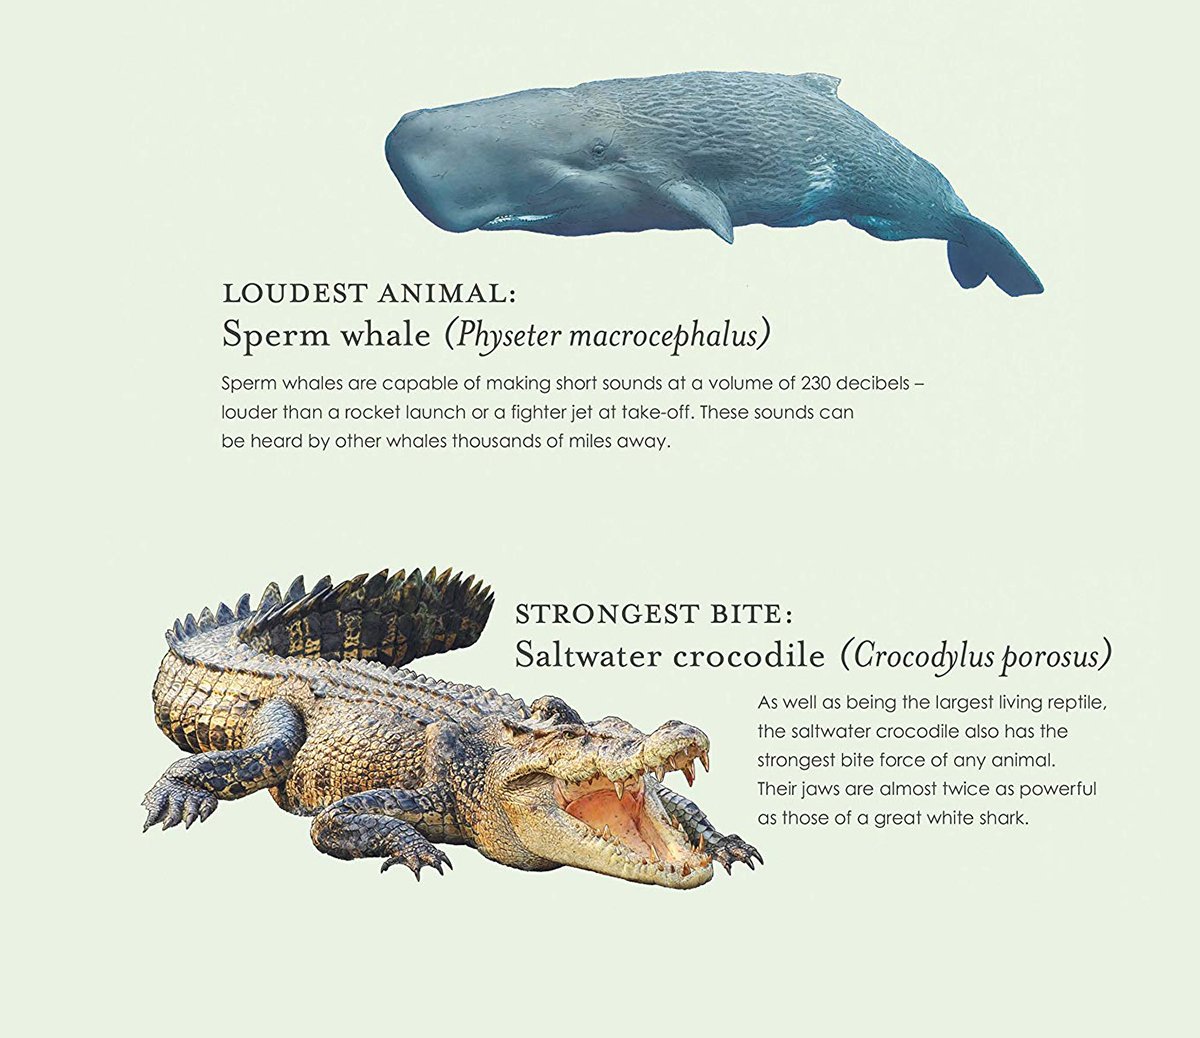 ben-rothery-sperm-whale-crocodile-illustration.jpg